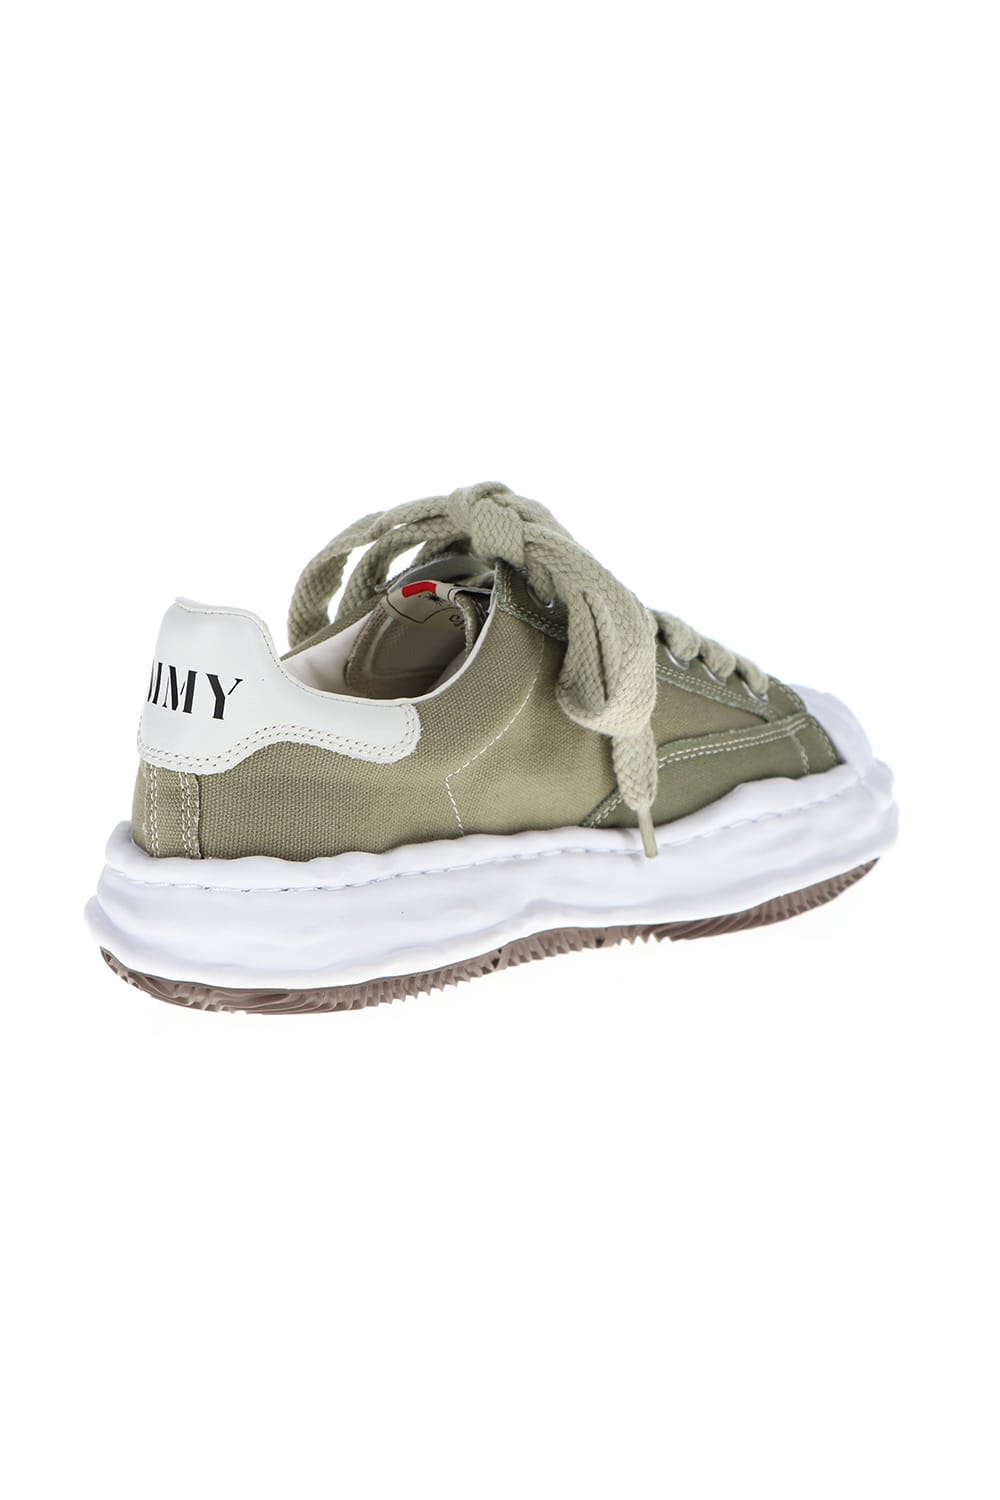 -BLAKEY Low- Original sole canvas Low-Top sneakers Green